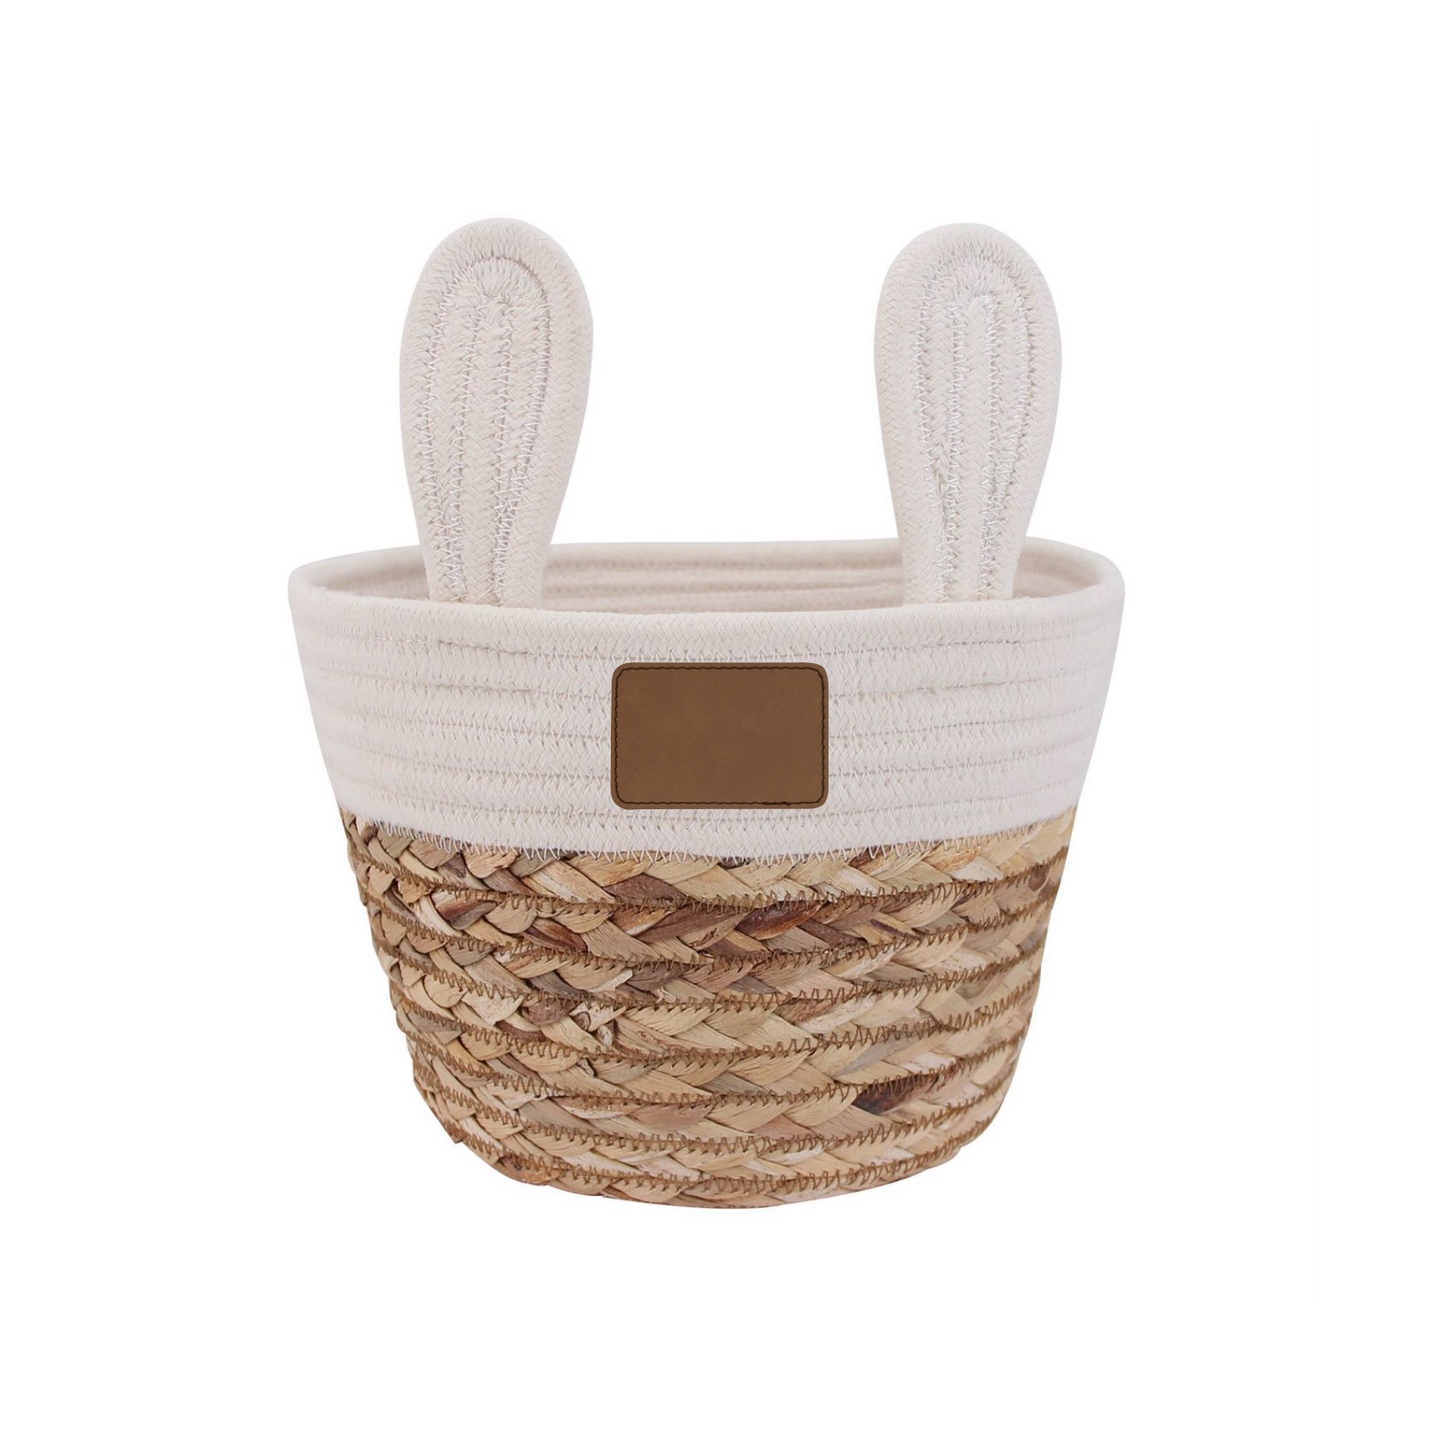 Bunny ear Easter basket